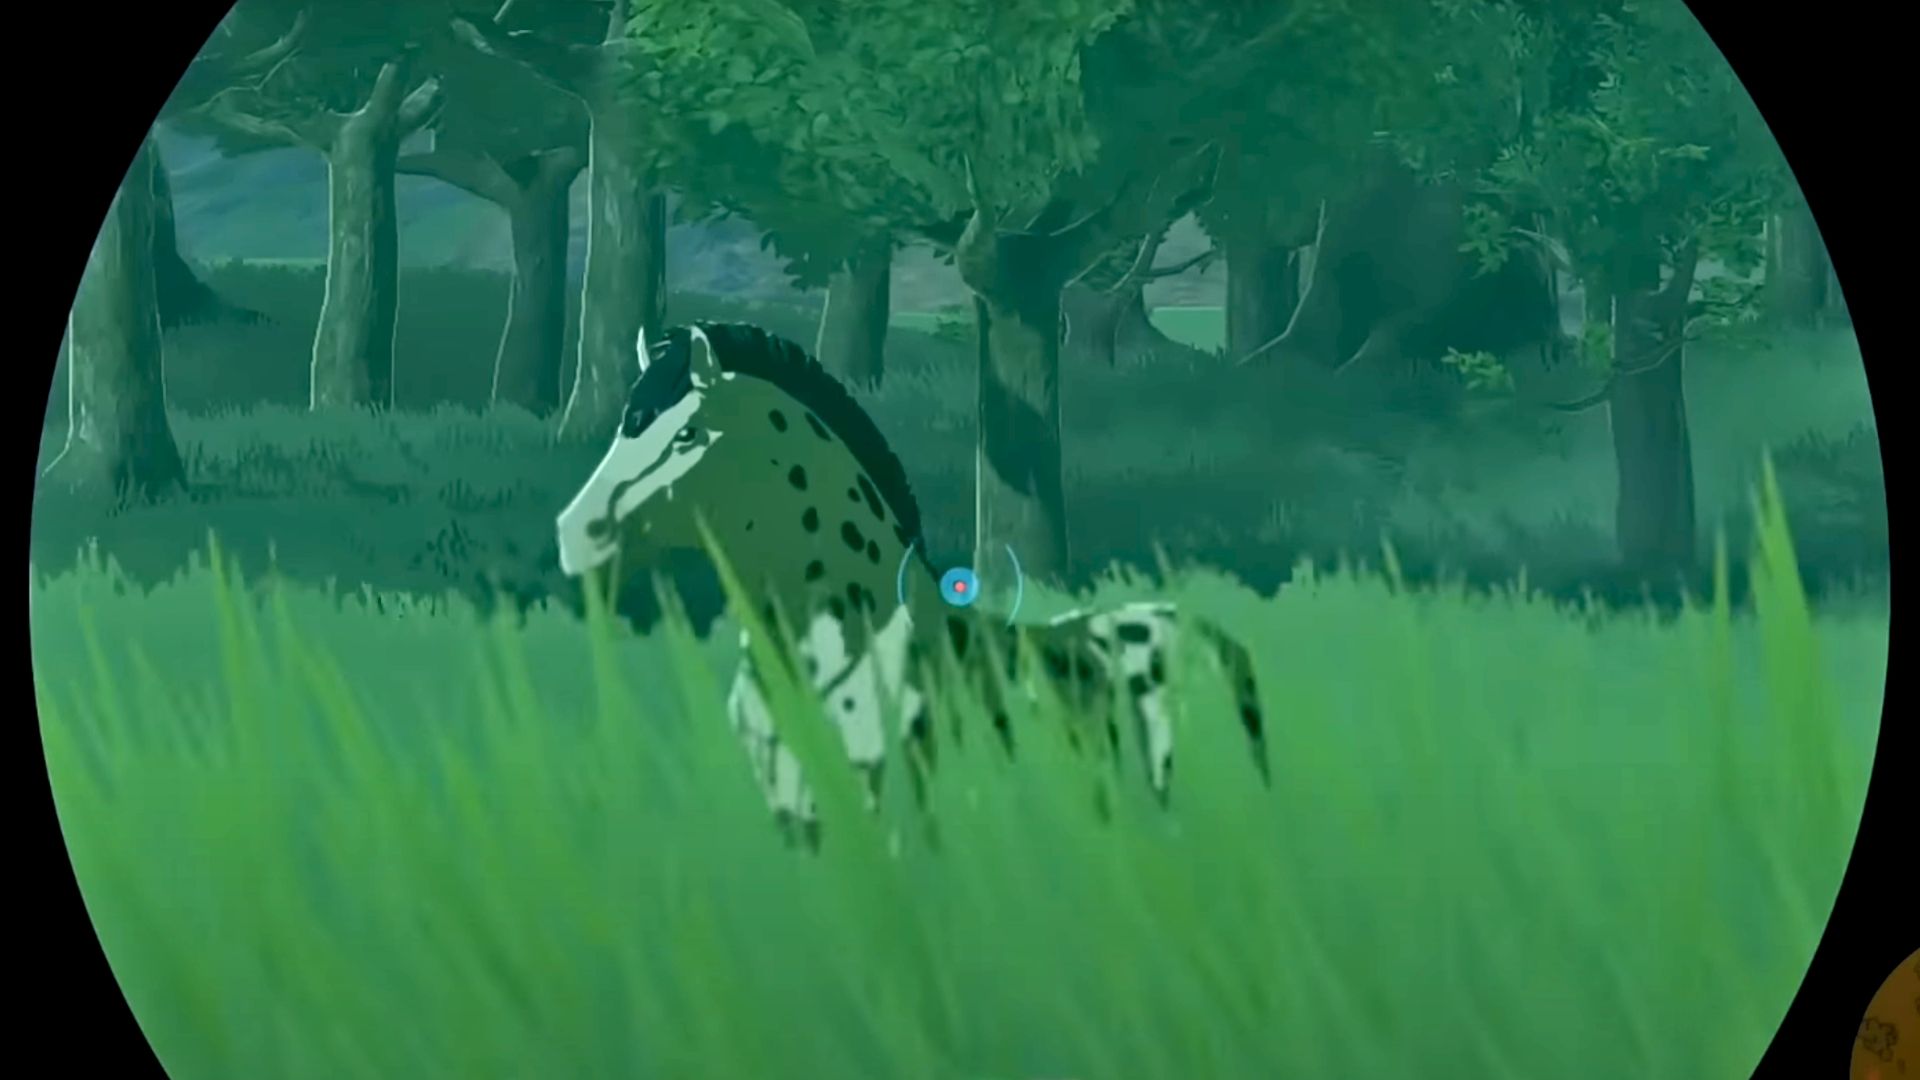 Spot, the horse, in Zelda TOTK viewed through a scope